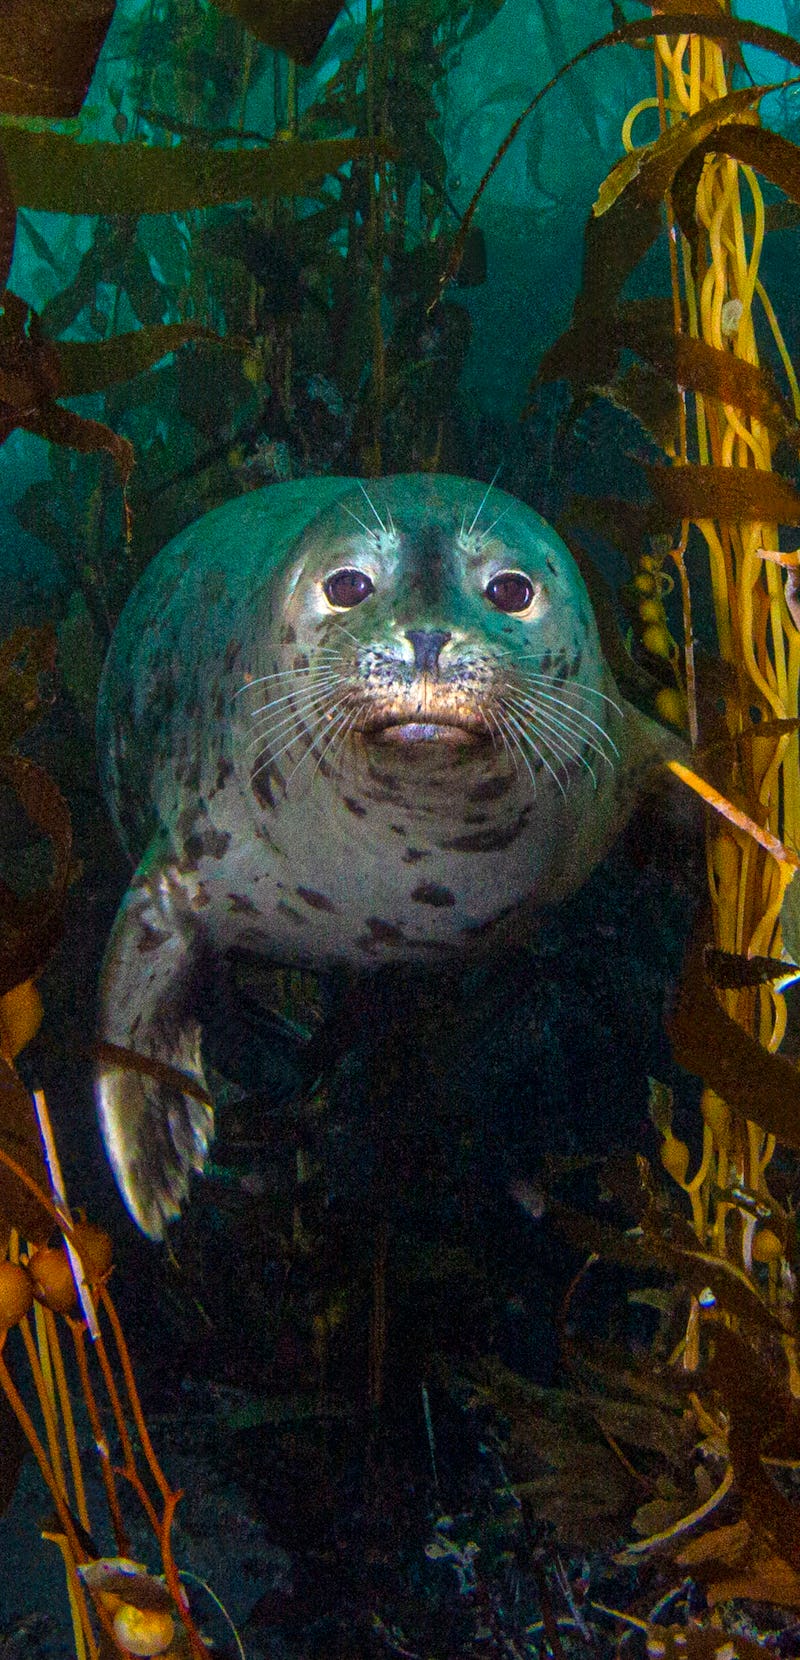 Underwater seal in kelp forest